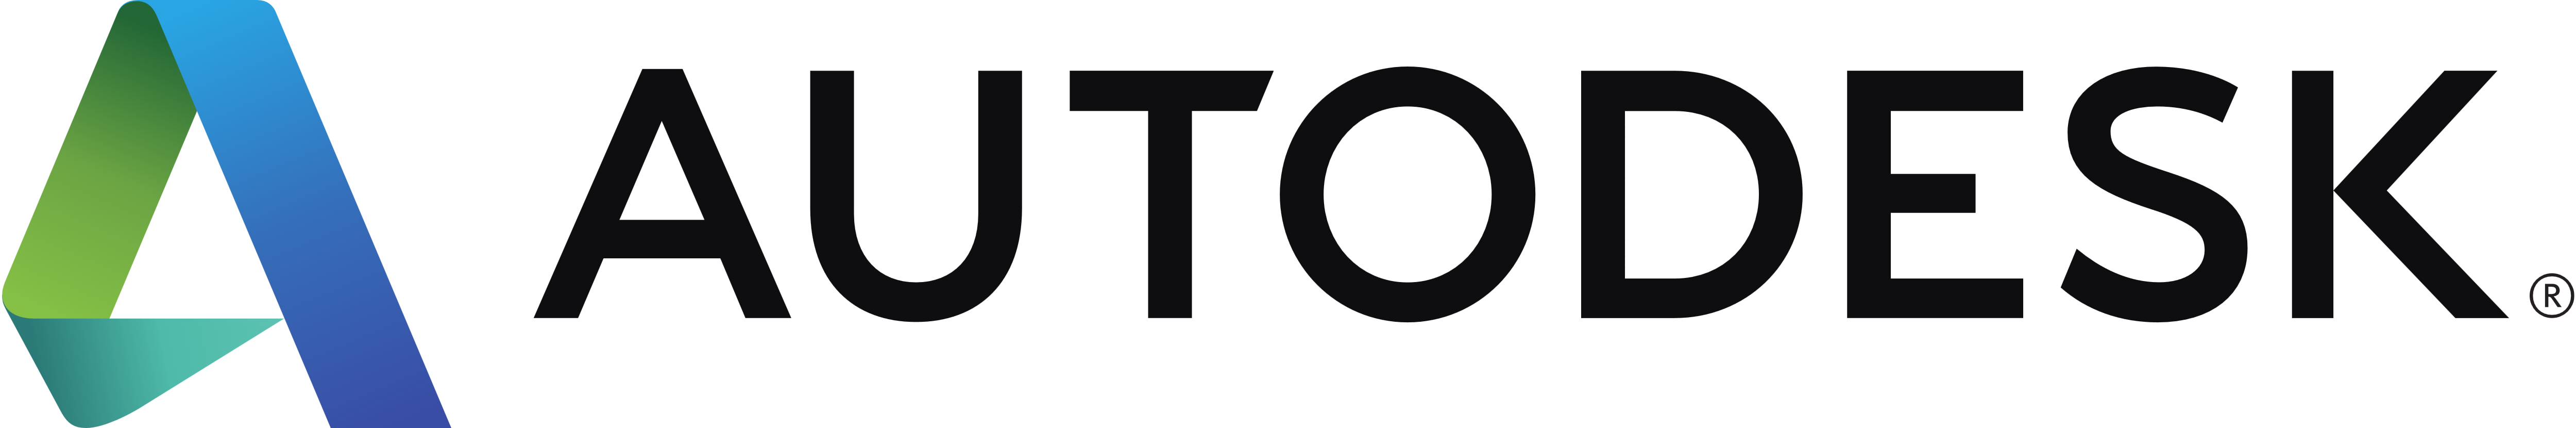 Autodesk Logo PNG - 176659